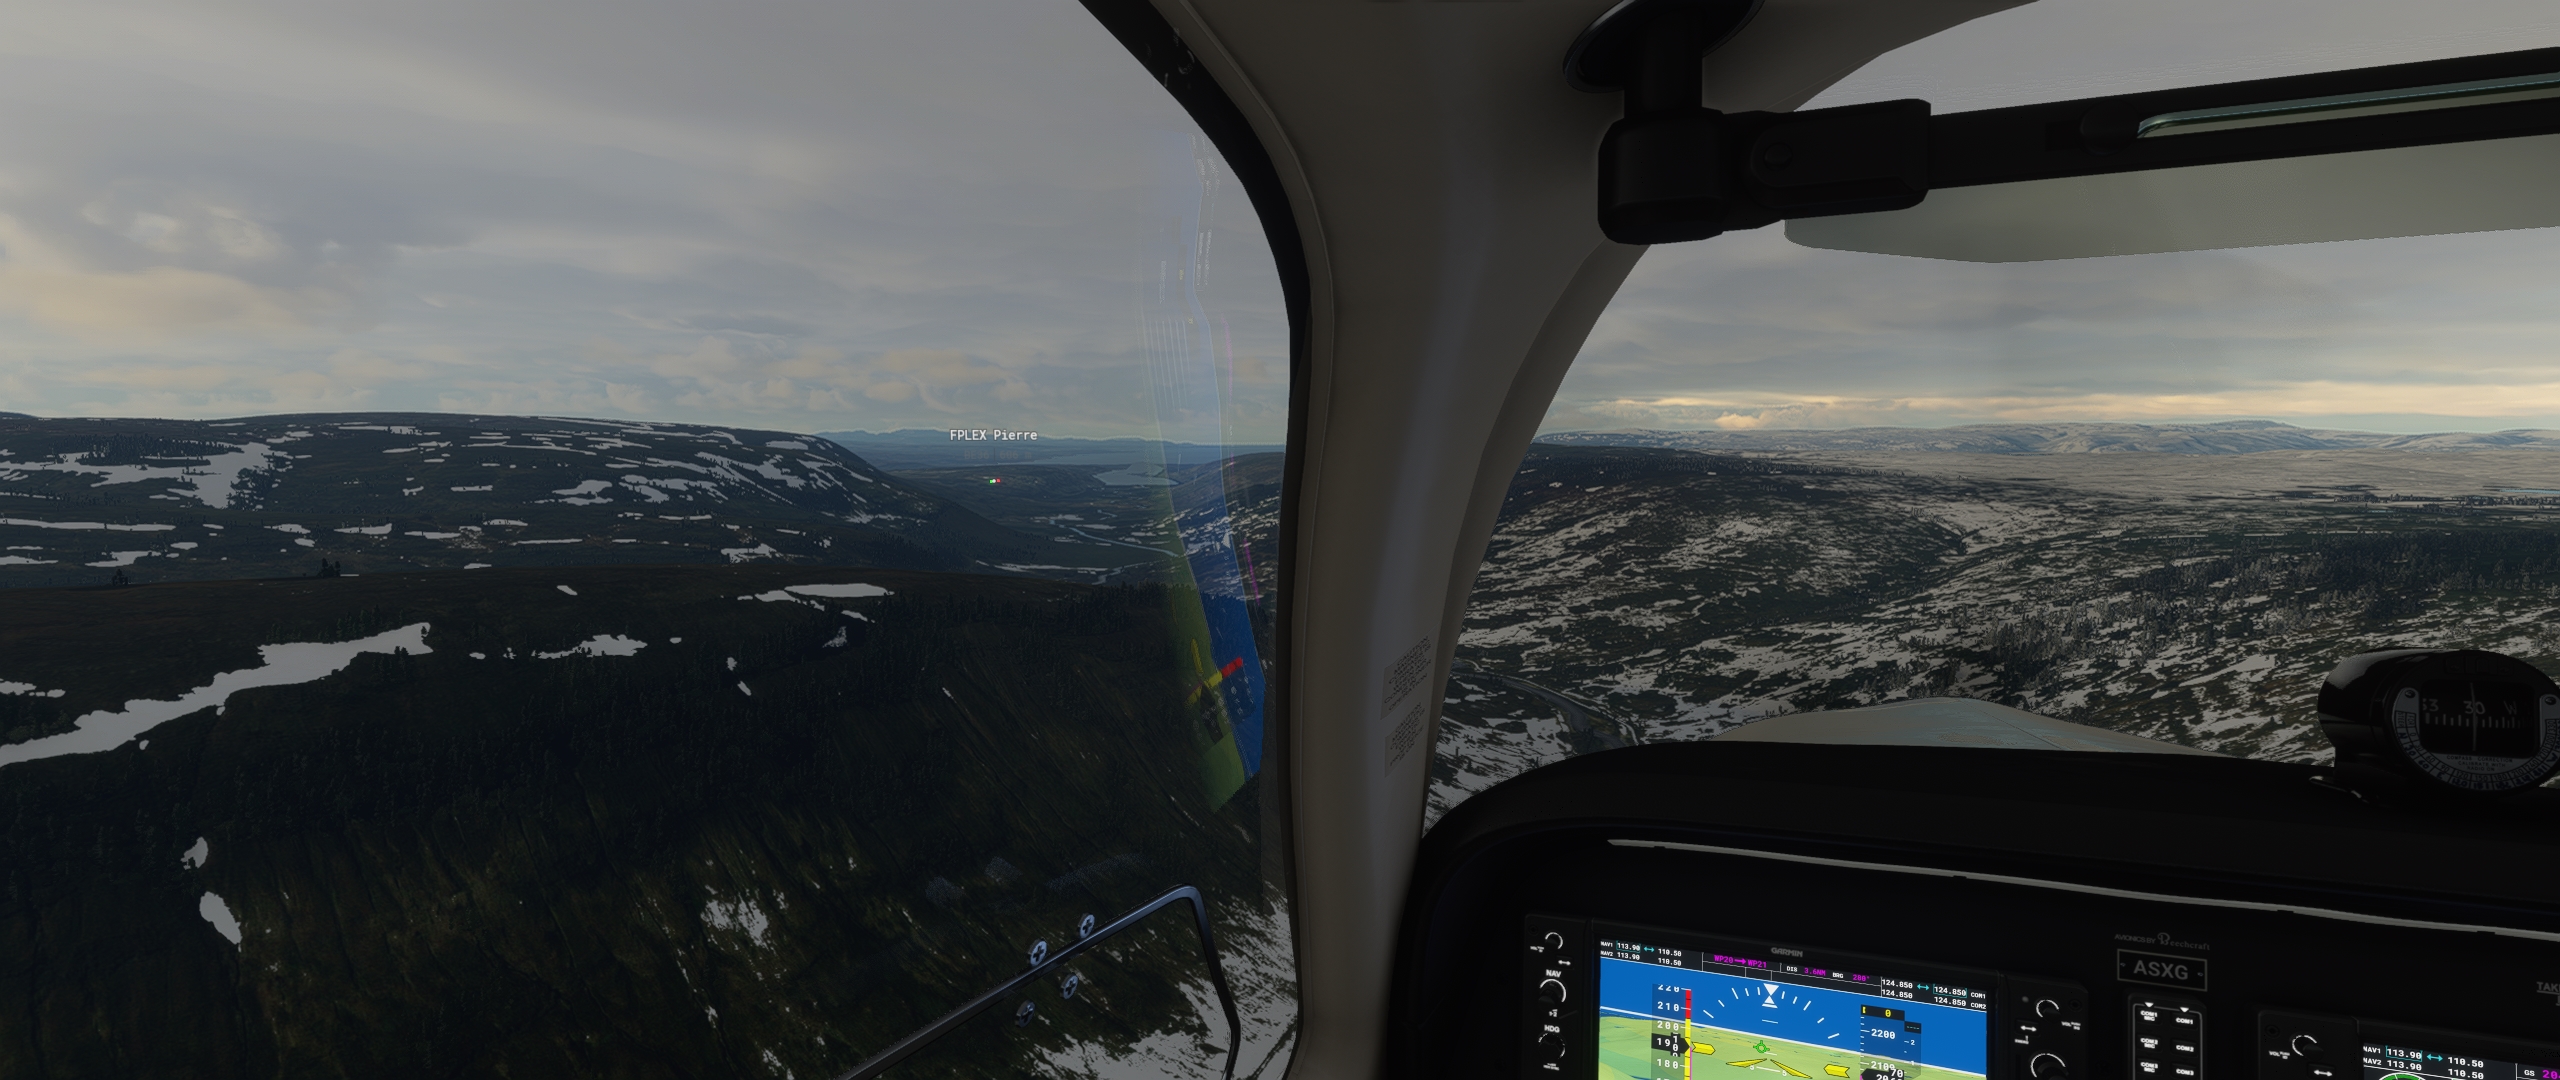 2021-02-13 18_11_48-Microsoft Flight Simulator - 1.12.13.0.jpg